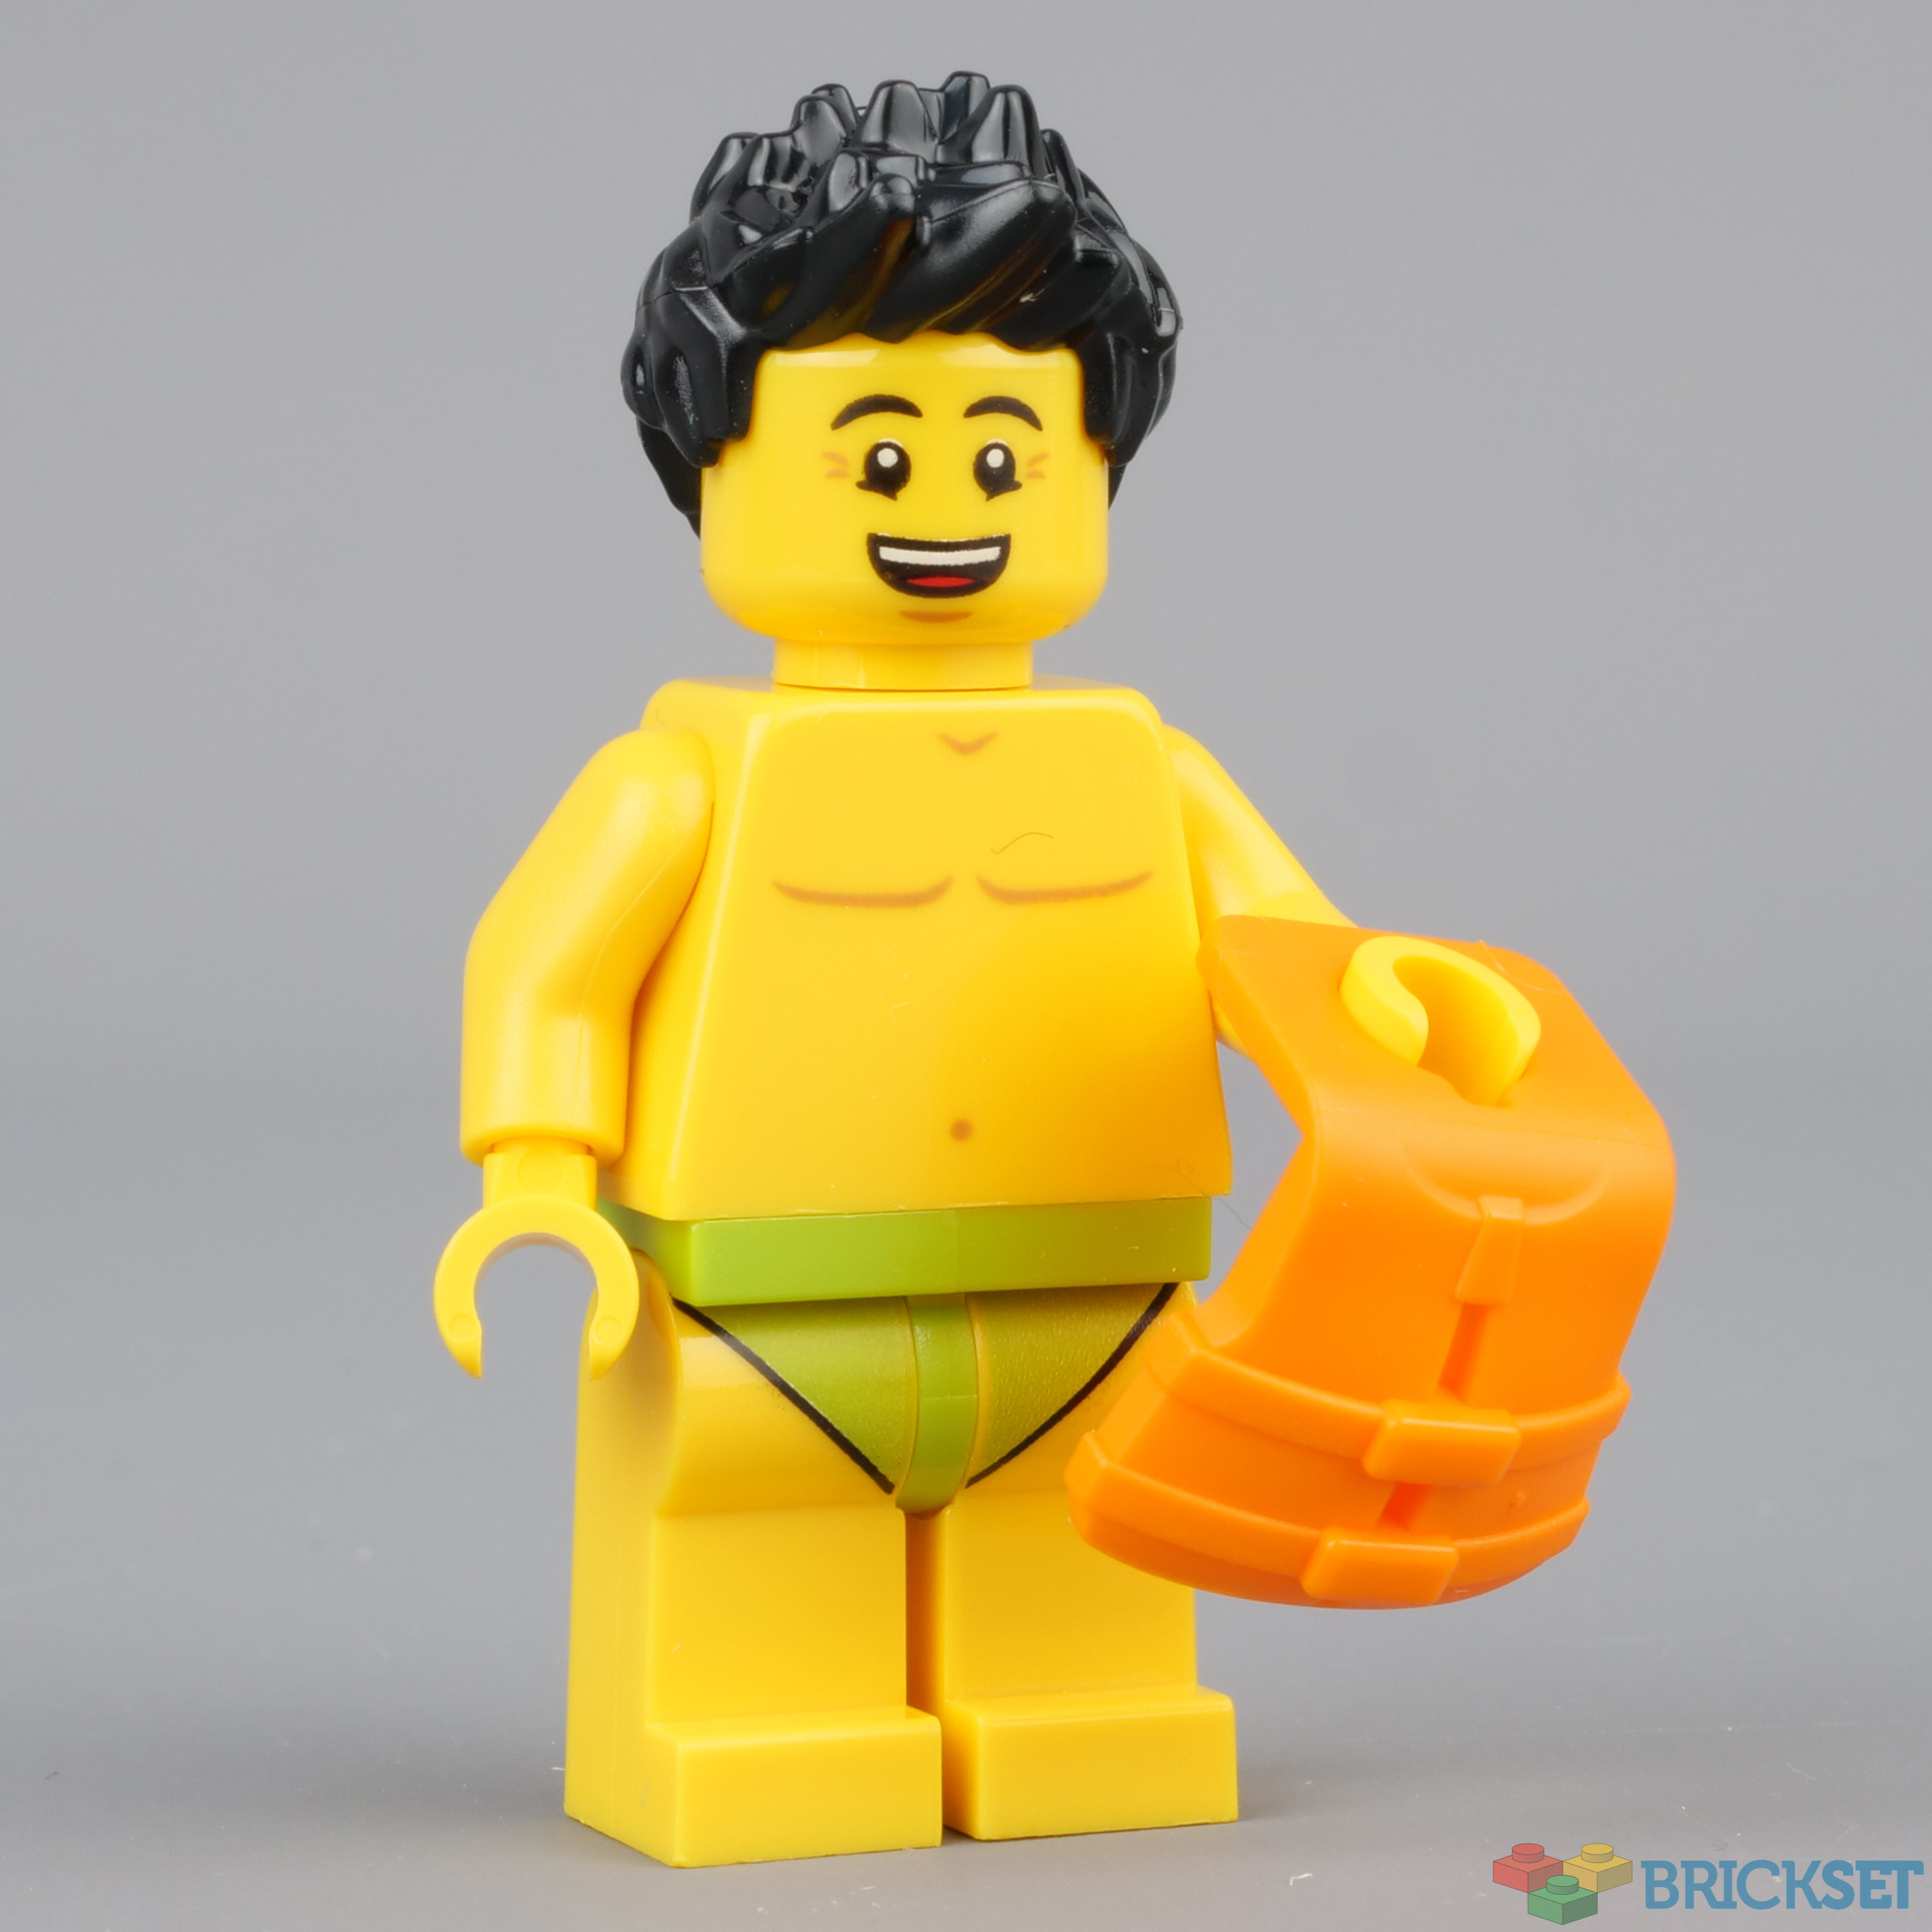 LEGO® City Stuntz Bathtub Stunt Bike - Fun Stuff Toys